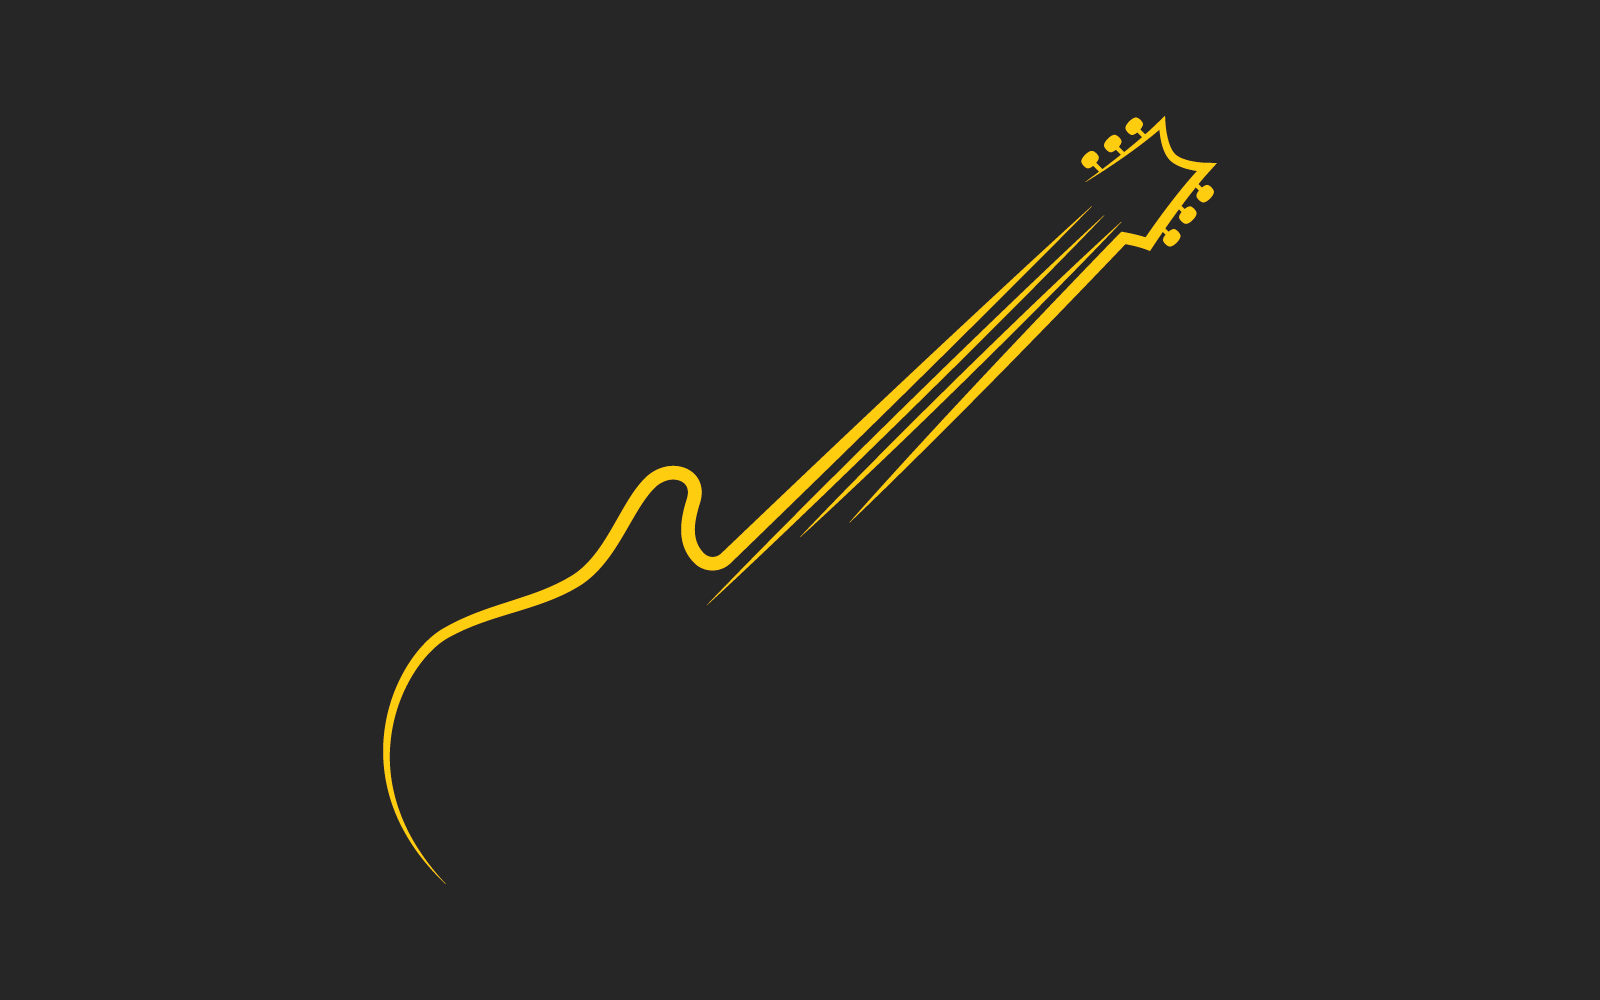 Guitar illustration flat design vector template